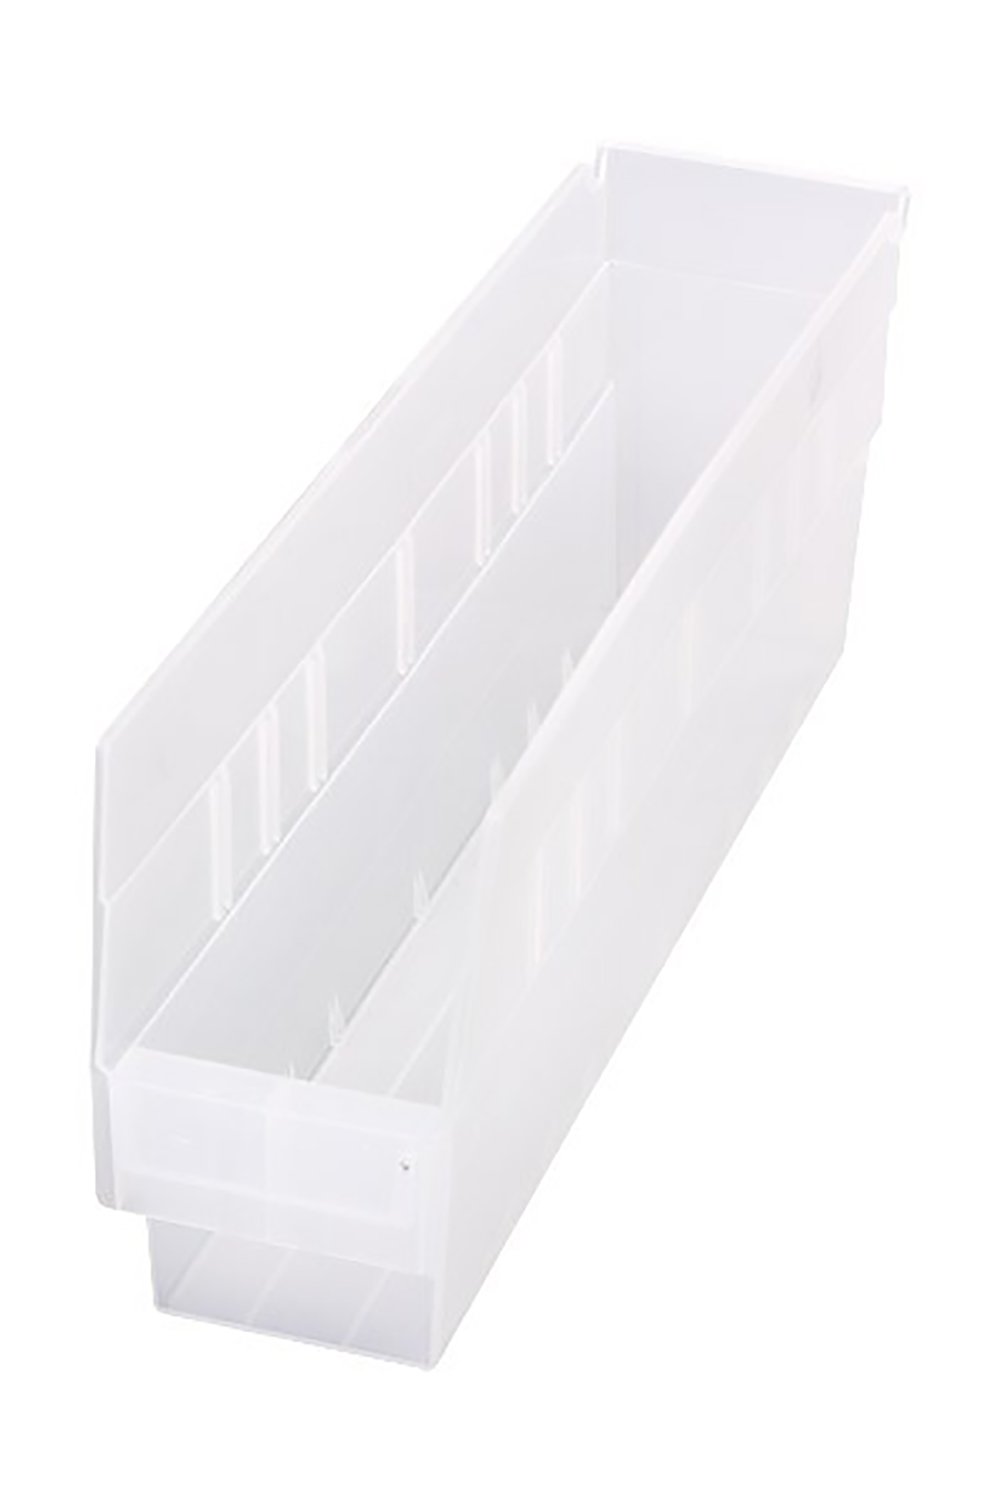 Shelf Bin for 18"D Shelves Bins & Containers Acart 17-7/8" x 4-3/8" x 6" Clear 